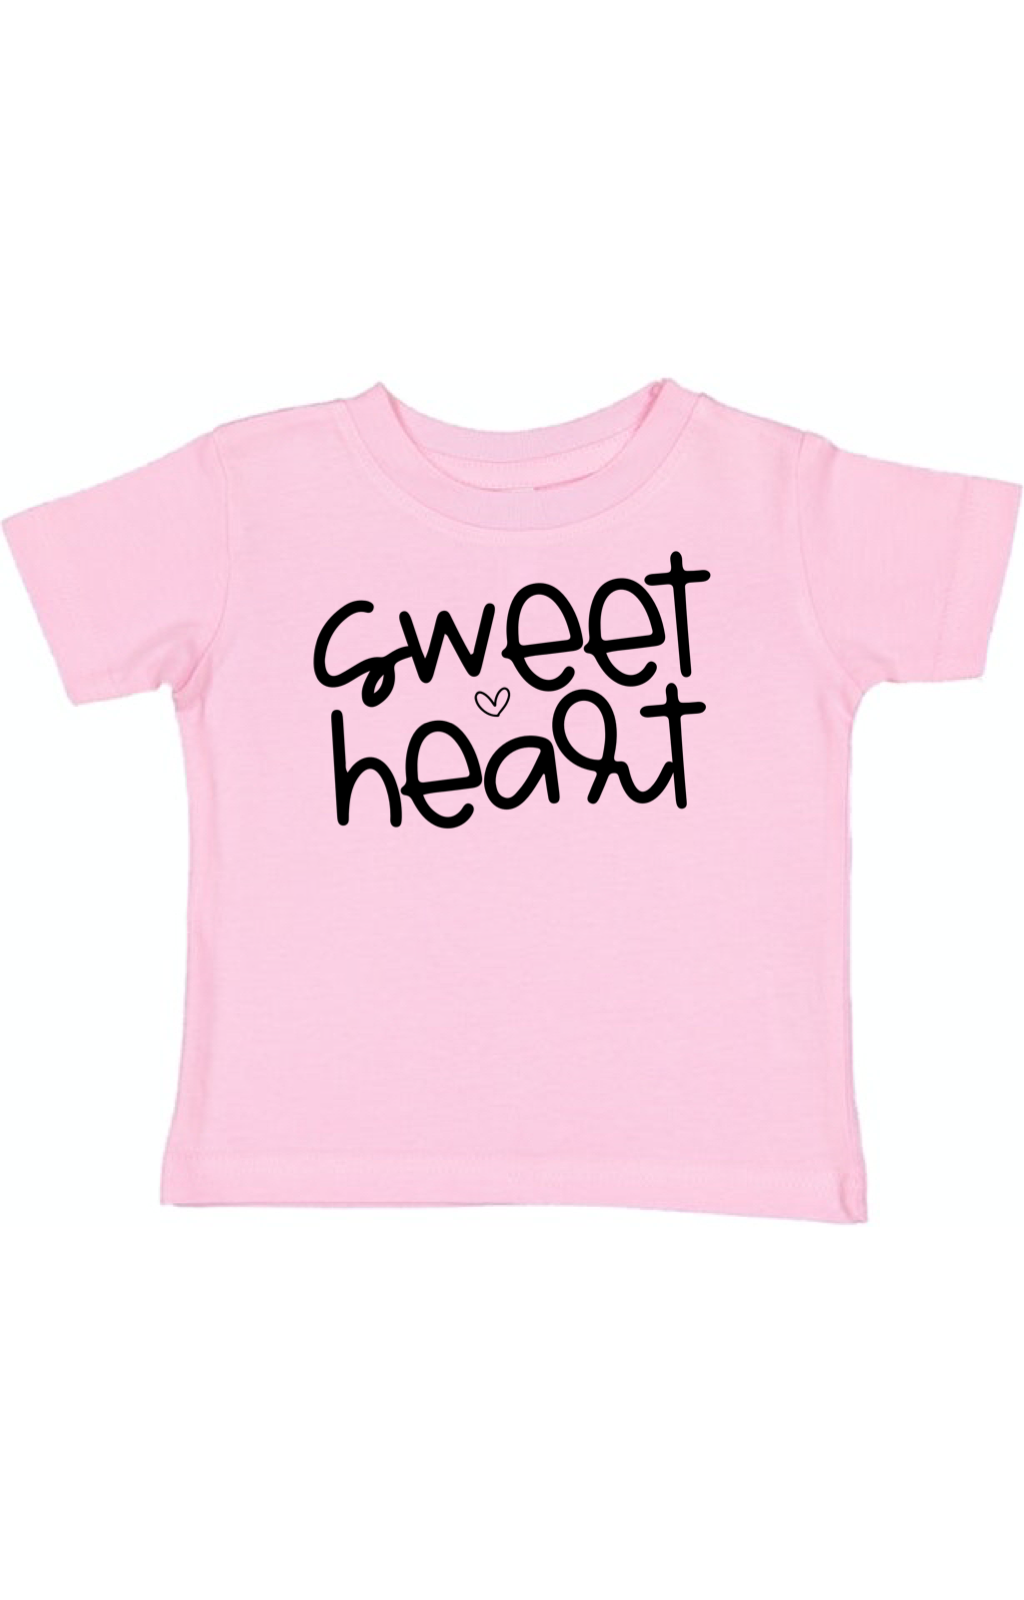 Sweetheart shirt